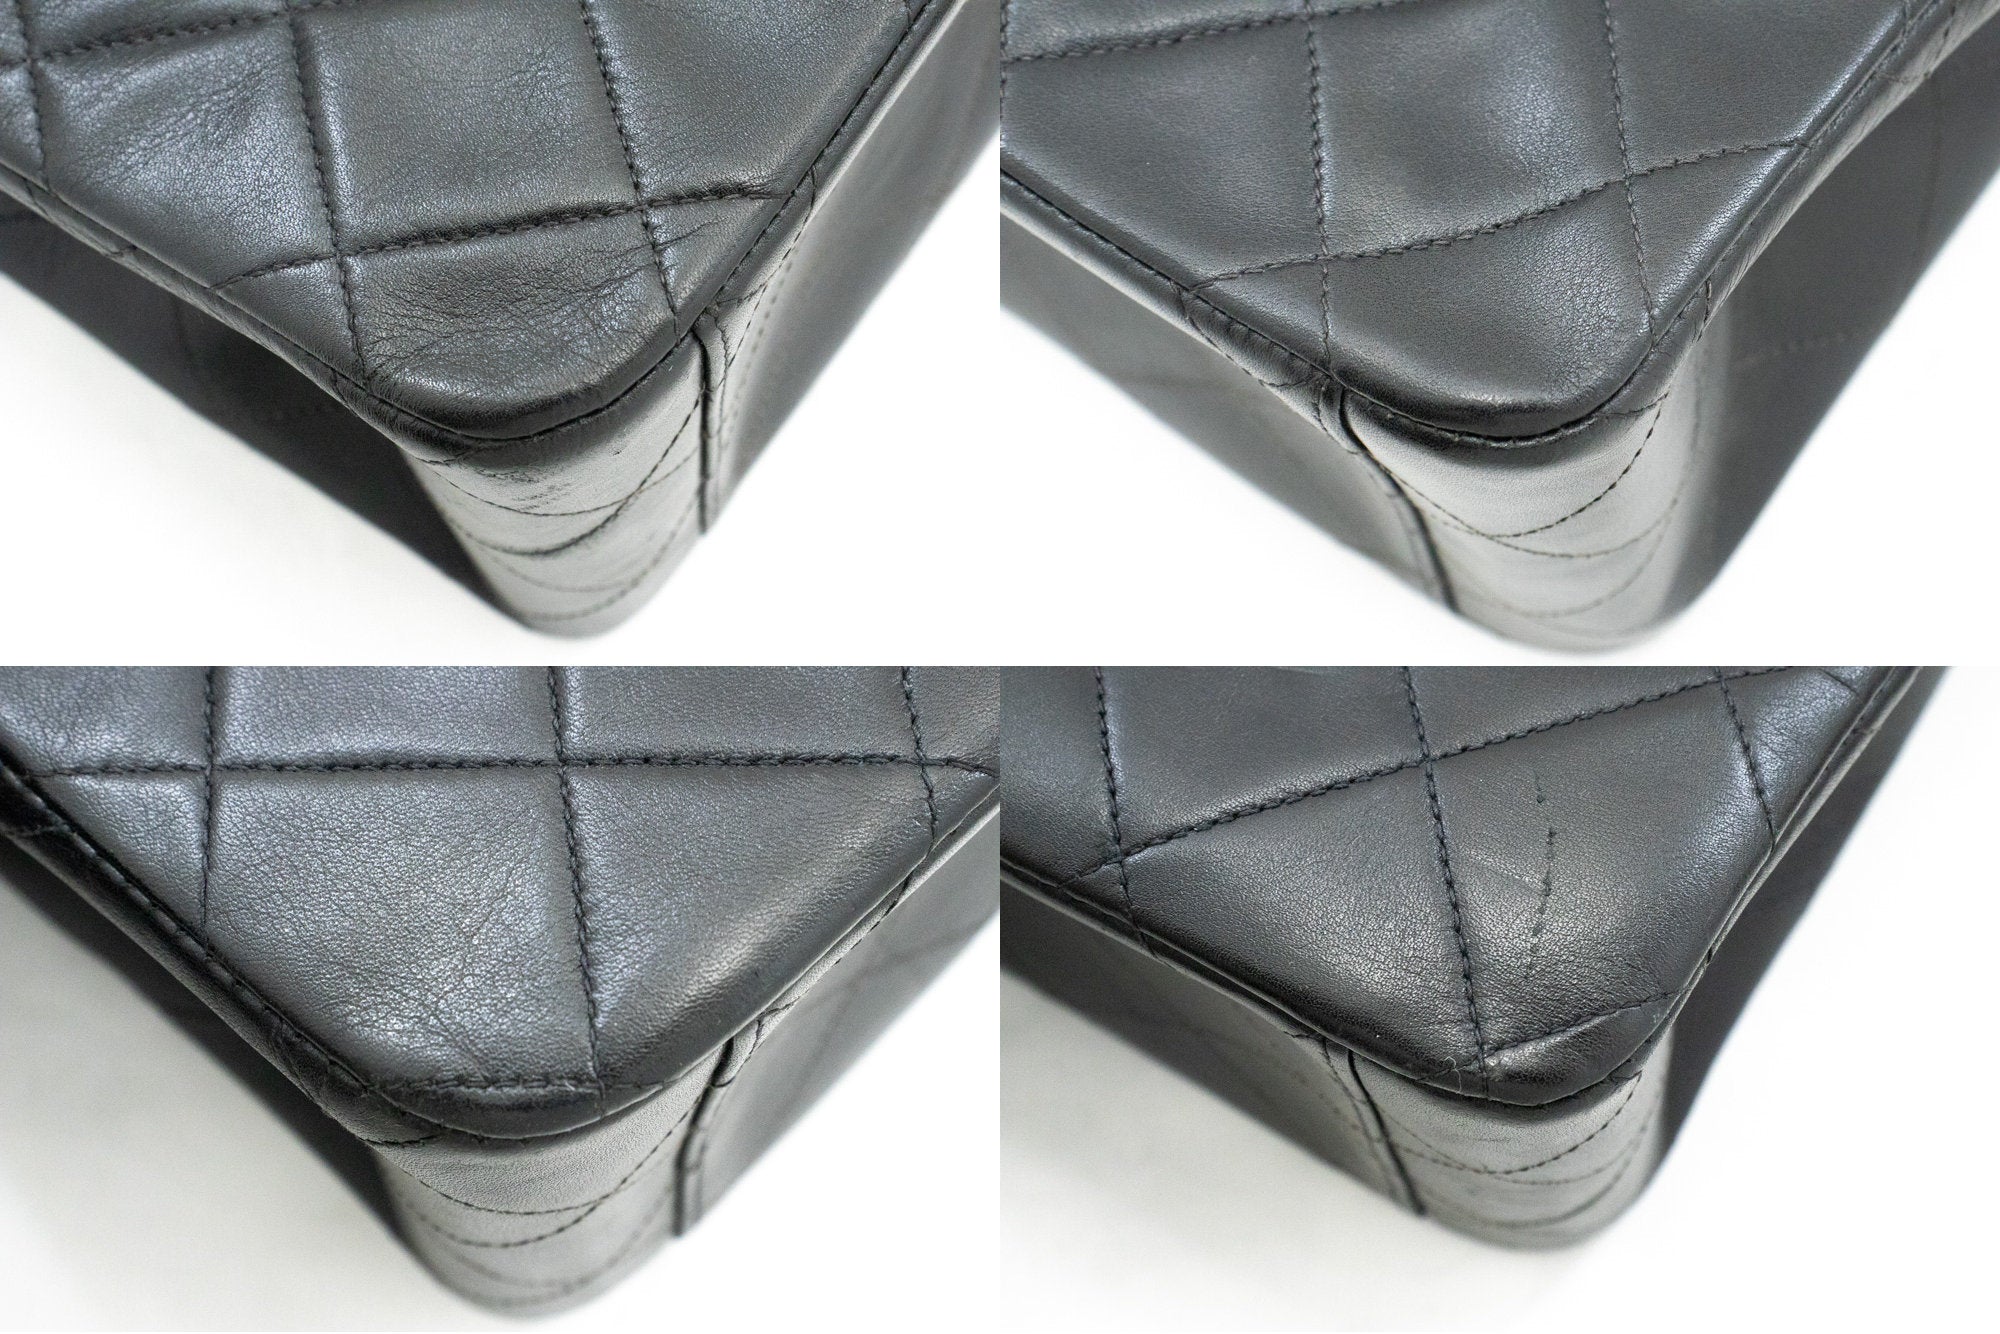 Chanel Classic Large 13 Flap Chain Shoulder Bag Black Lambskin J58